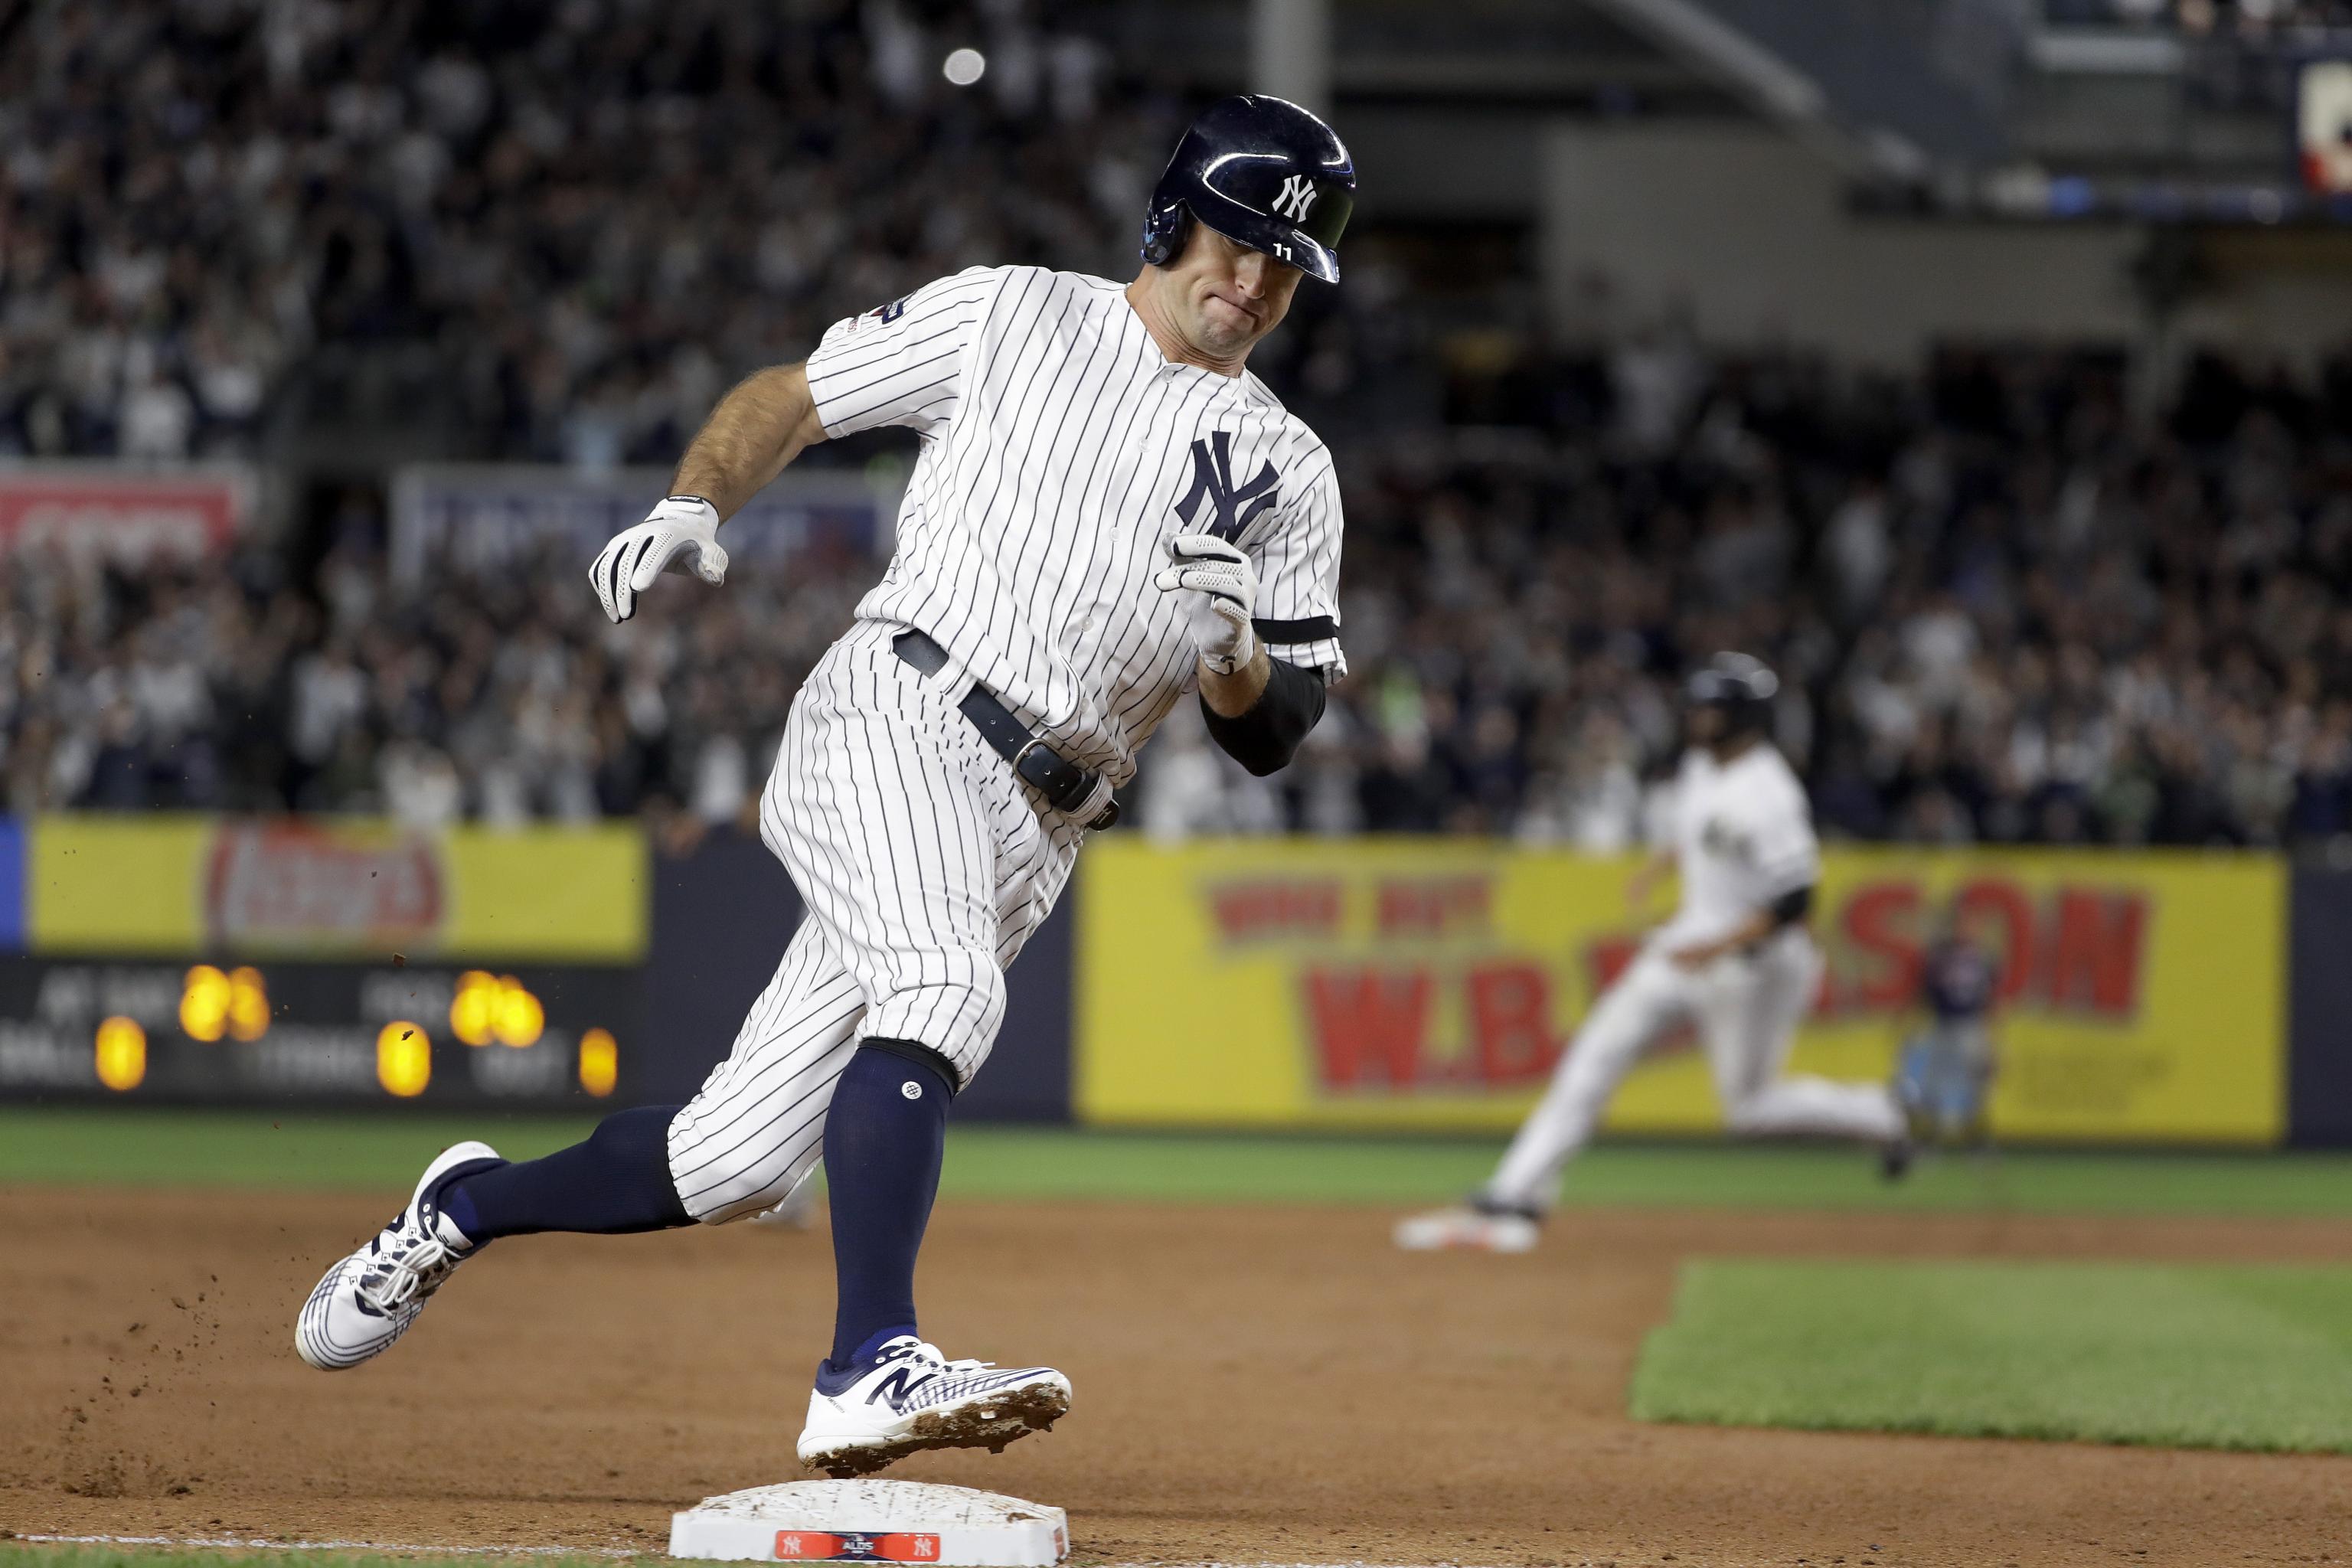 Yankees Rumors: Brett Gardner Agrees to 1-Year, $12.5M Contract